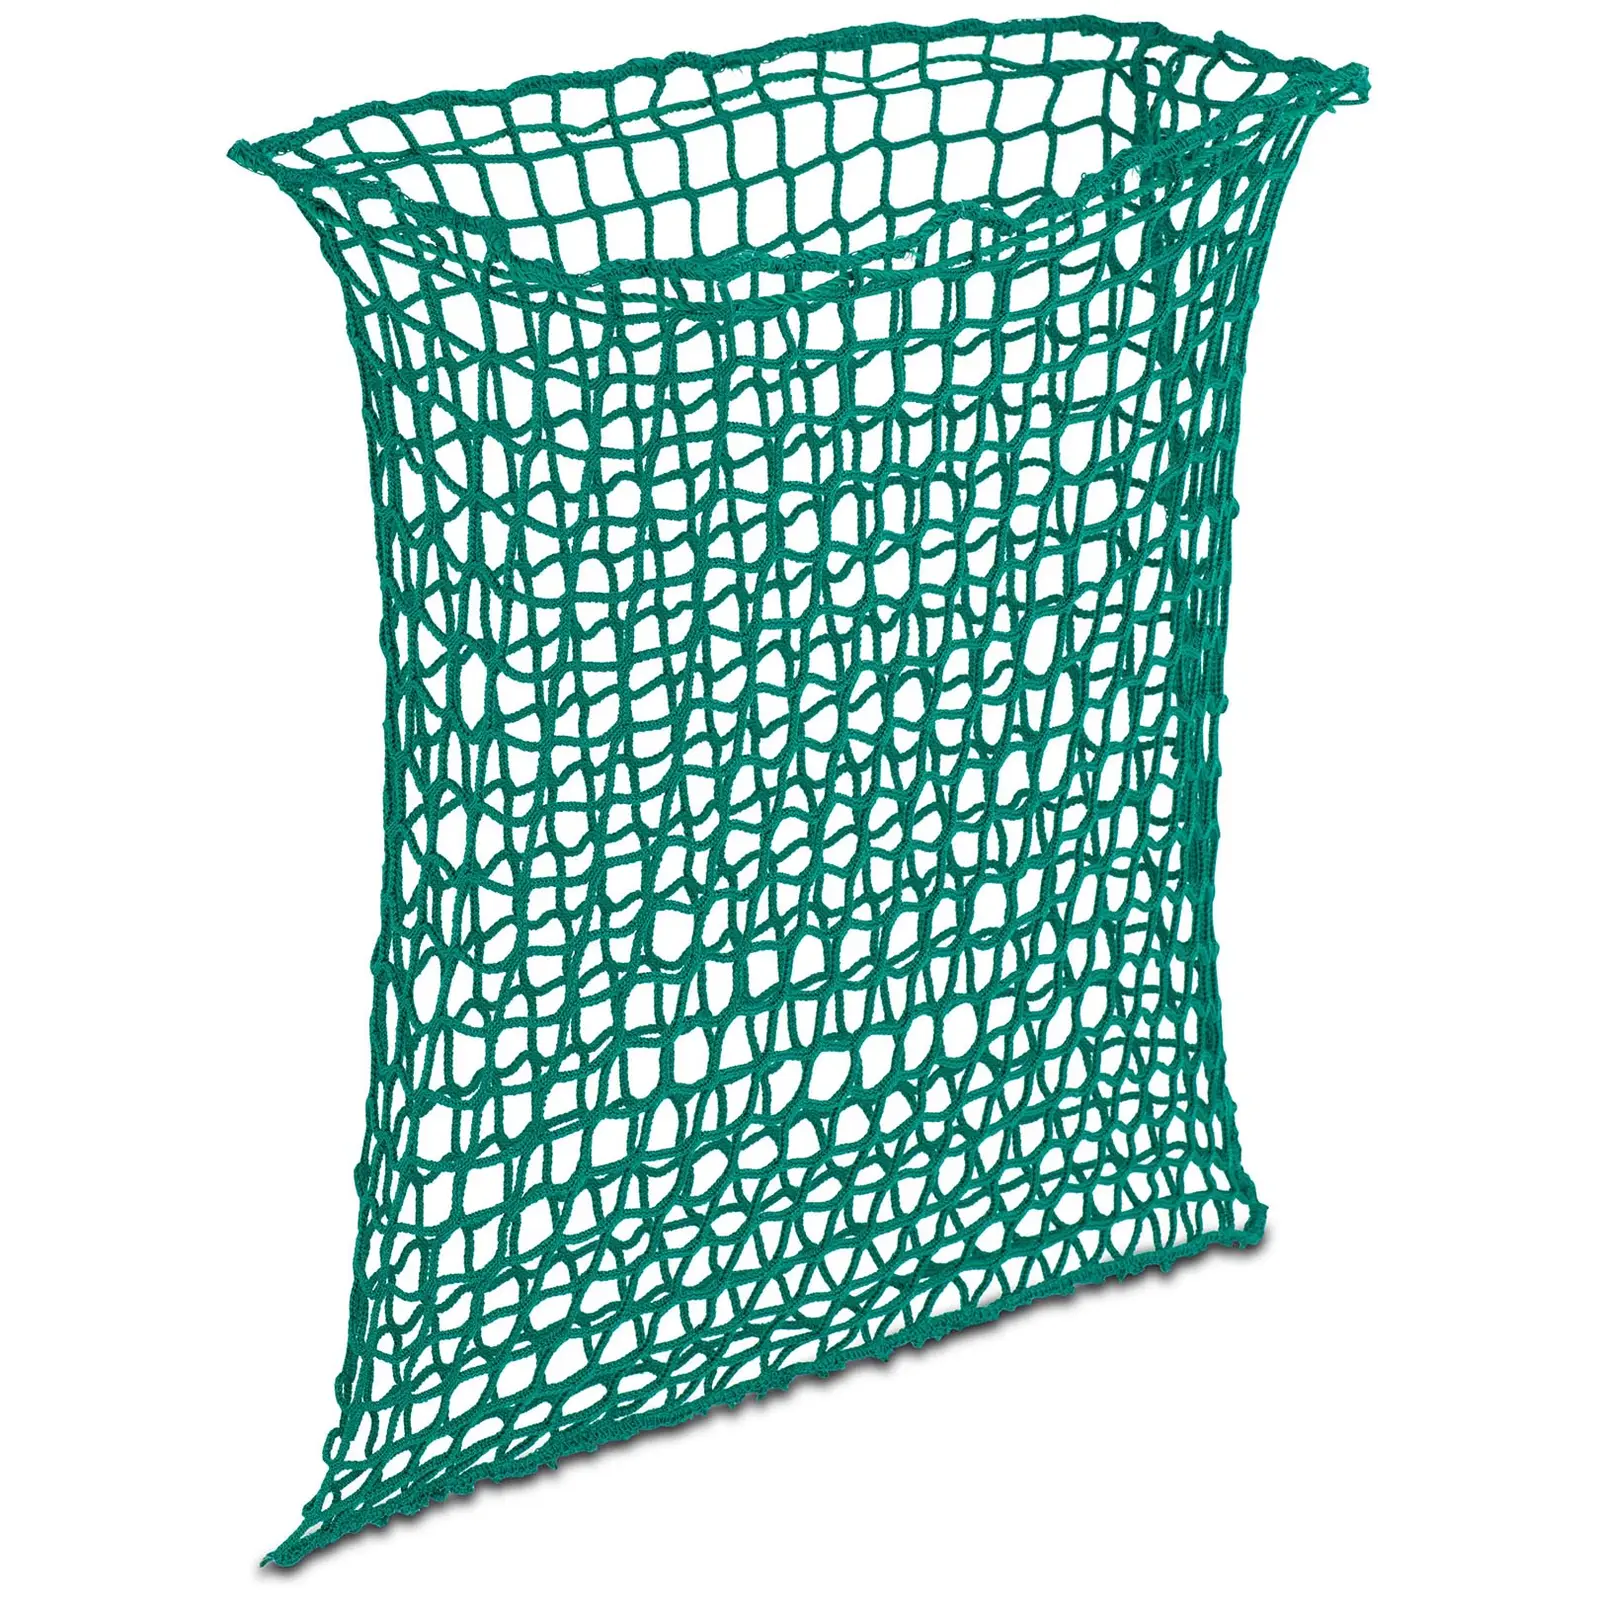 Hay Net - 1,000 x 900 mm - mesh size: 45 x 45 mm - Black